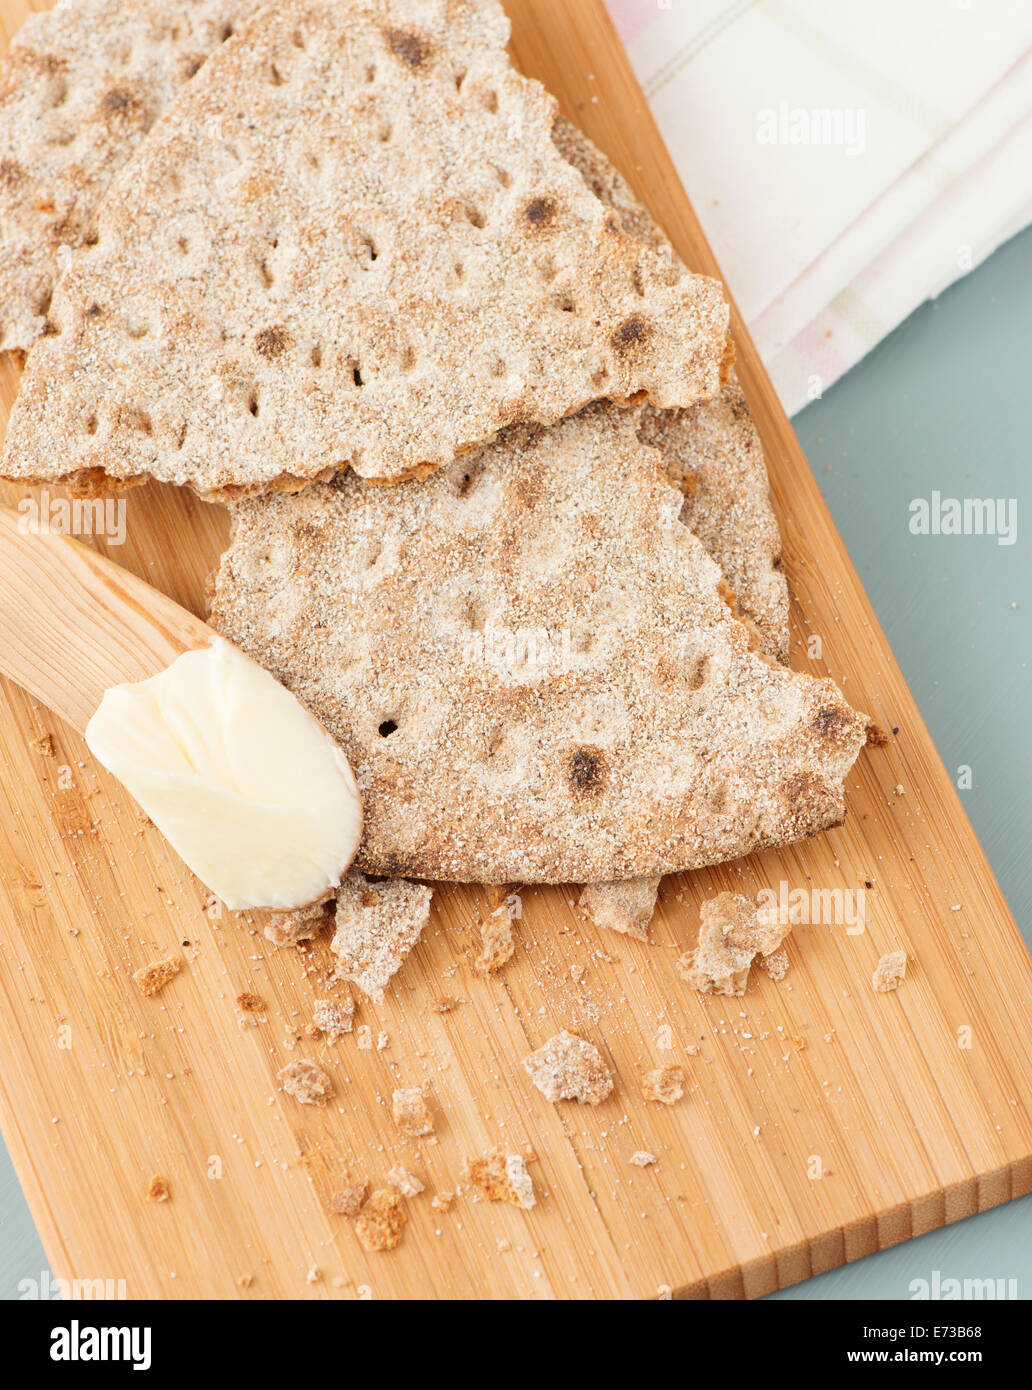 Closeup of swedish crispbread, flat rye bread, on wooden cutting board. Stock Photo